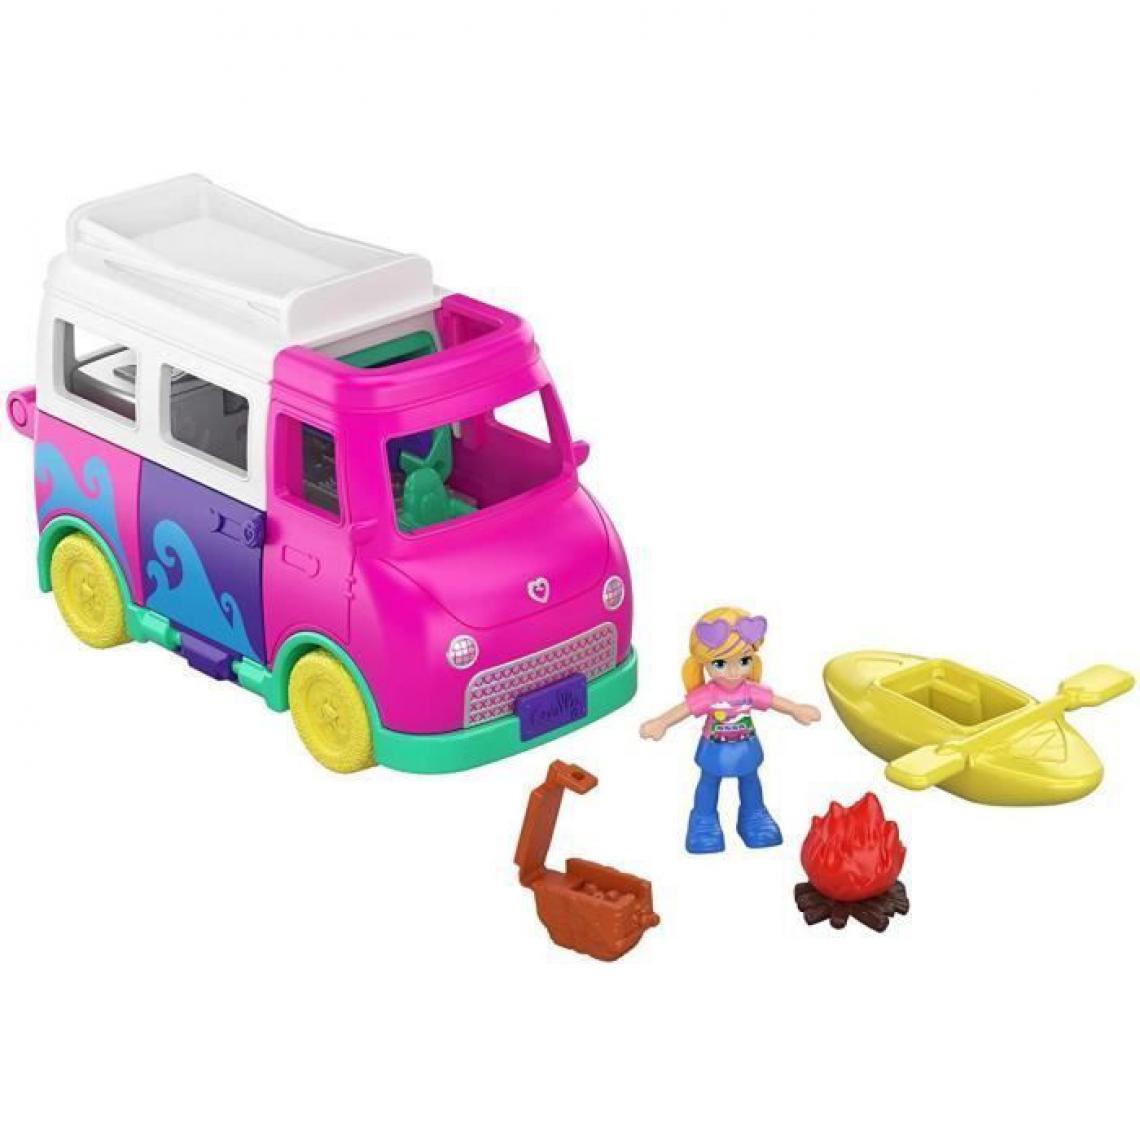 Polly Pocket - POLLY POCKET Vehicule de Pollyville Camping-Car - GKL49 - Coffret mini-figurine - 3 ans et + - Films et séries